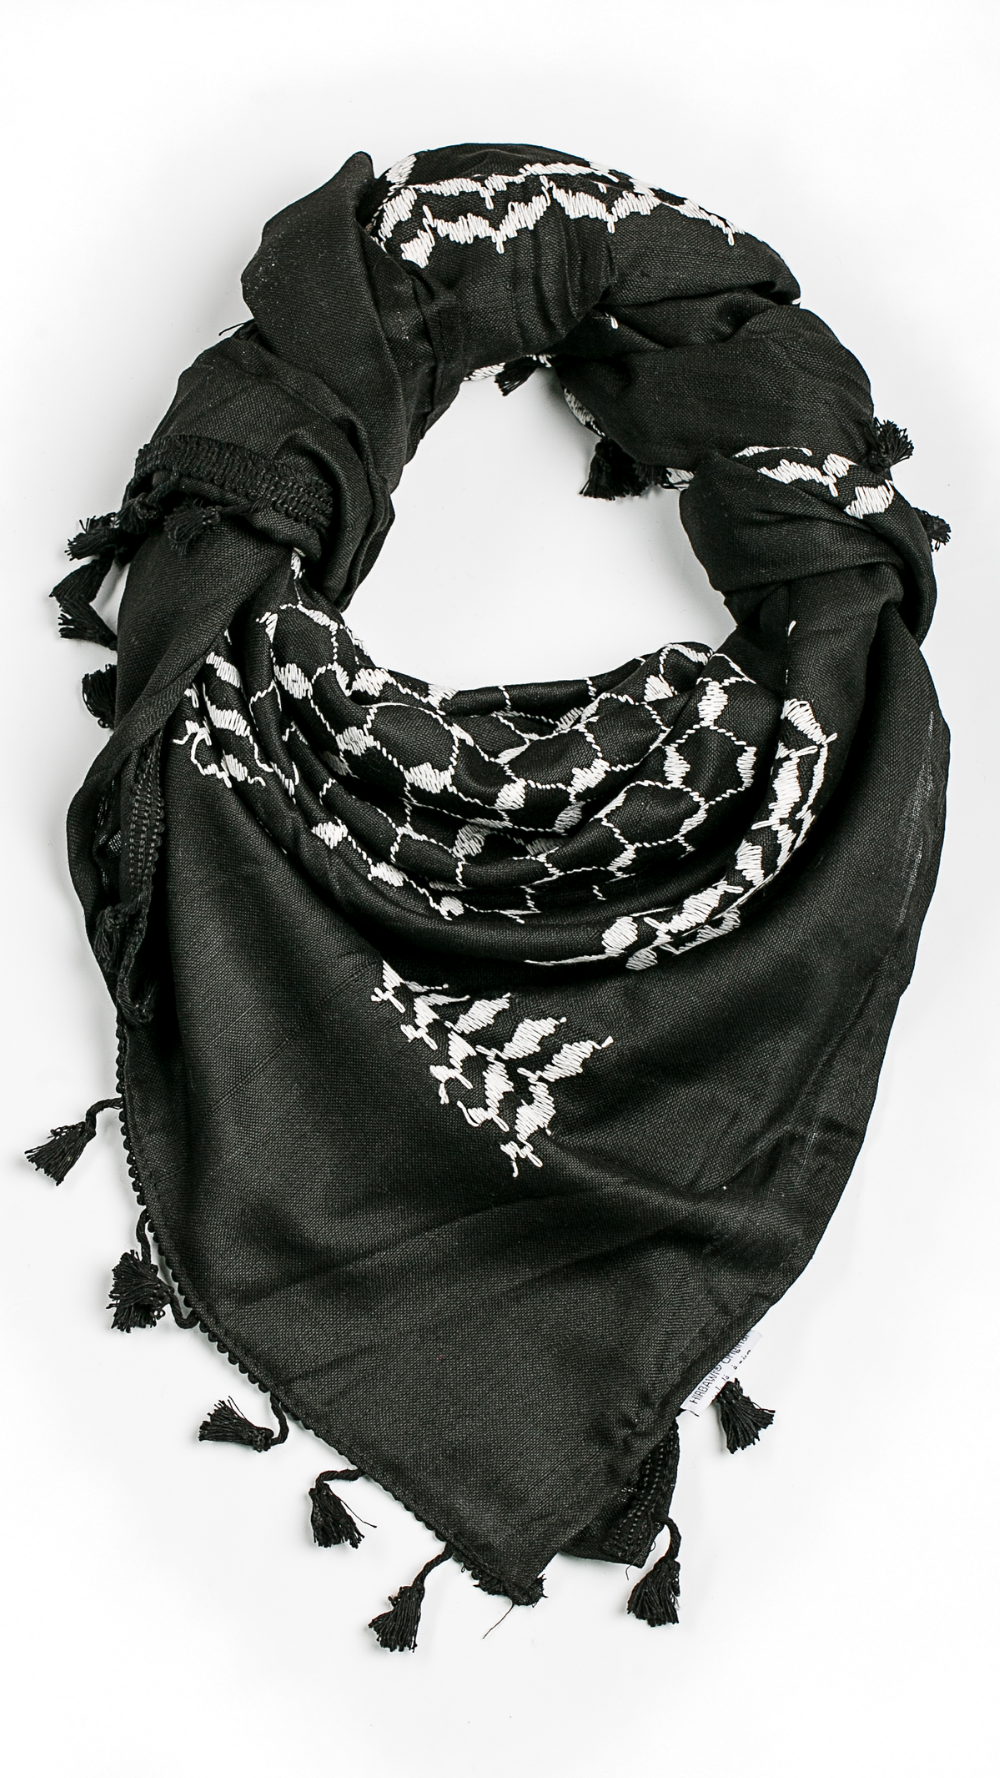 Inverted Black and White Hirbawi® Kufiya